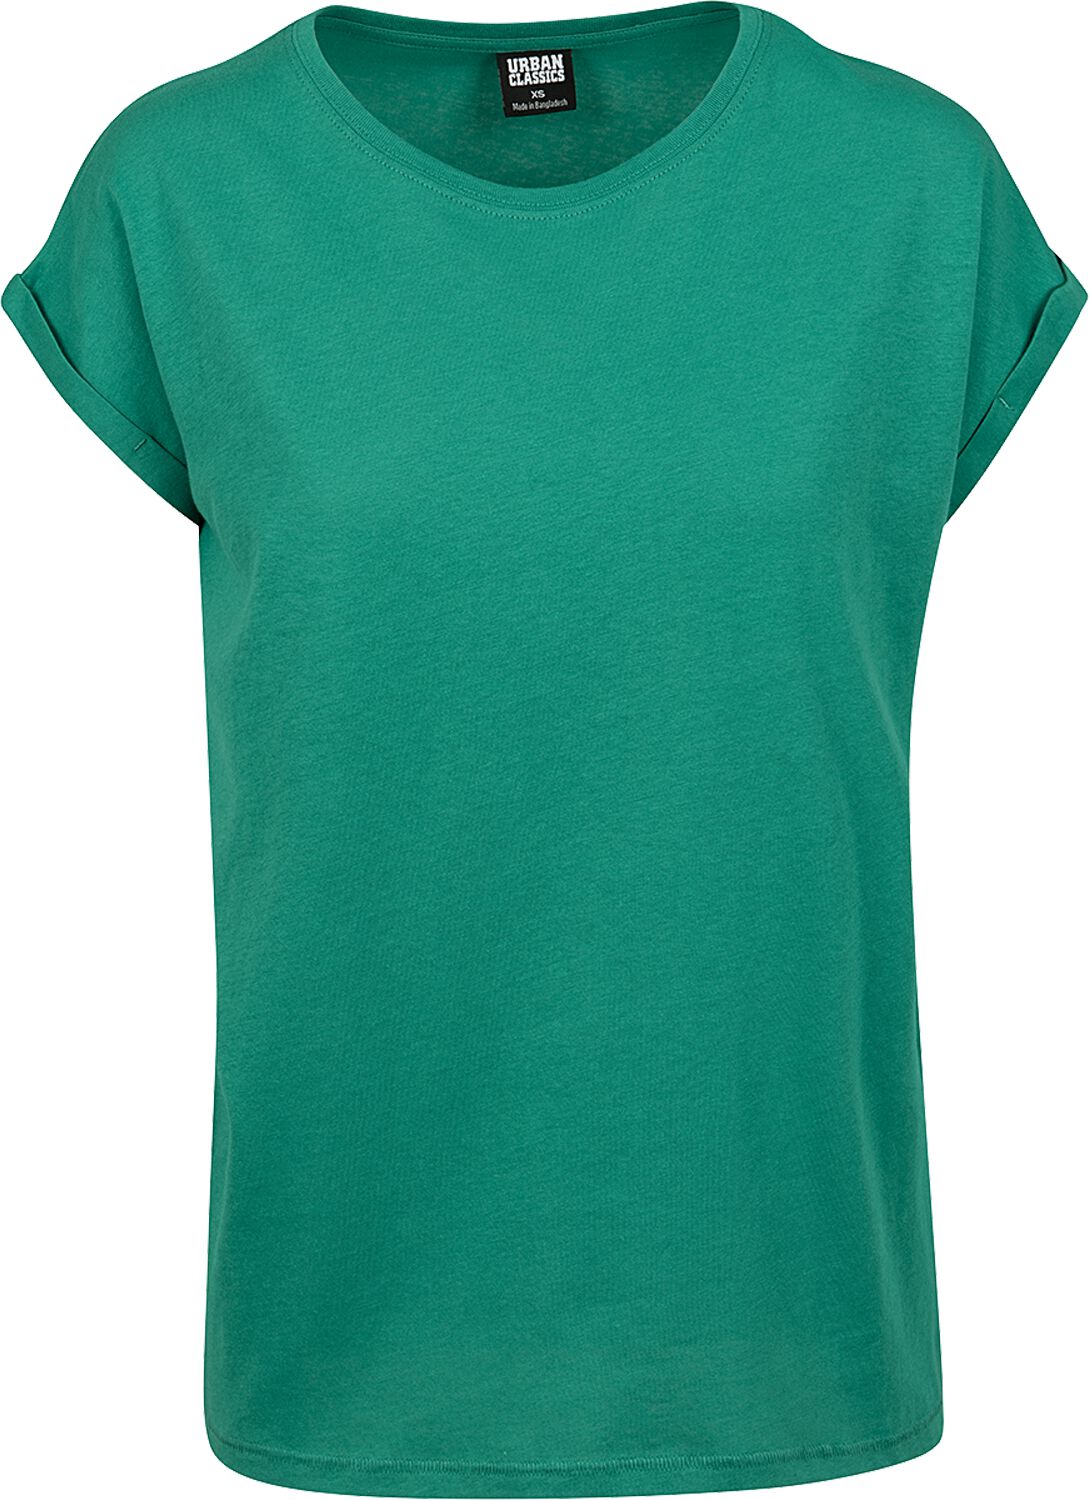 Urban Classics Ladies Extended Shoulder Tee T-Shirt green